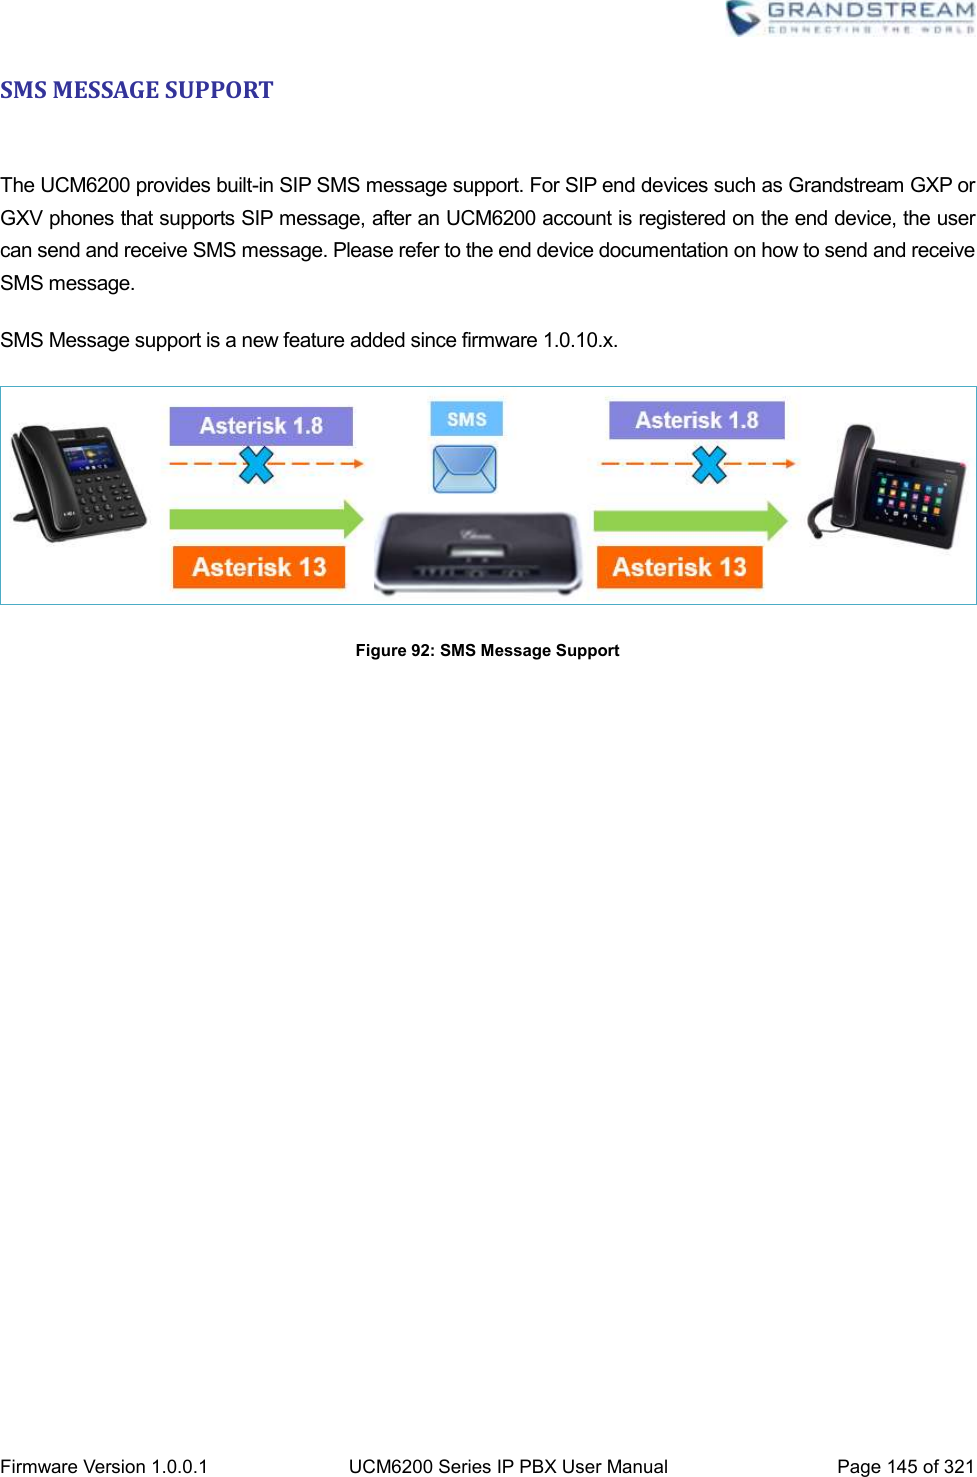 Grandstream Networks UCM6202 IP PBX User Manual